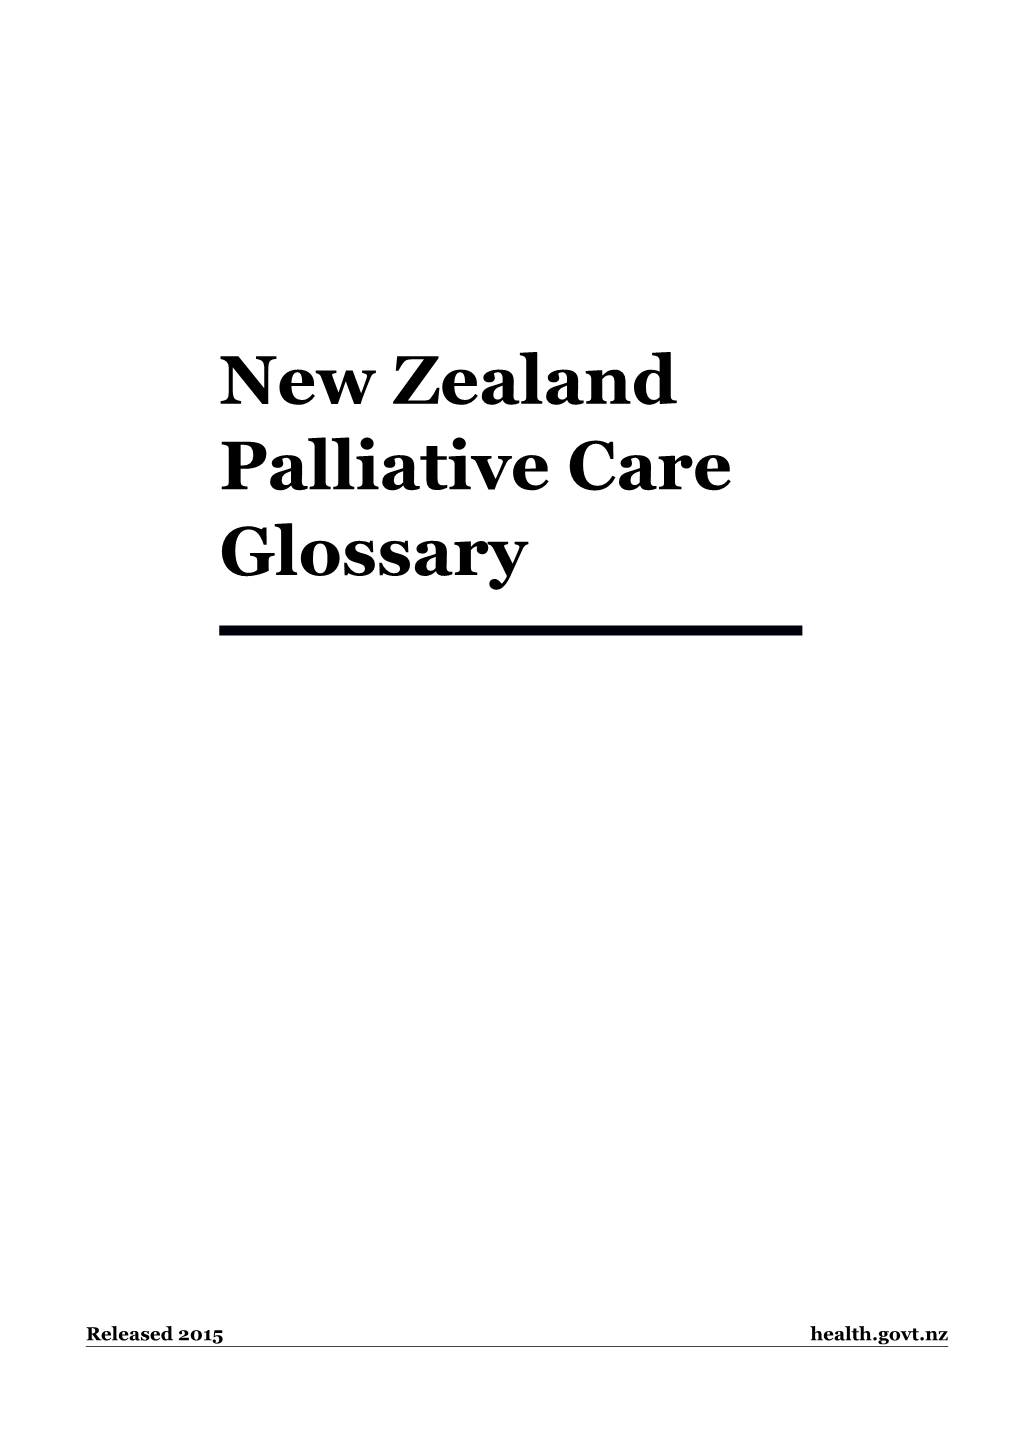 New Zealand Palliative Care Glossary